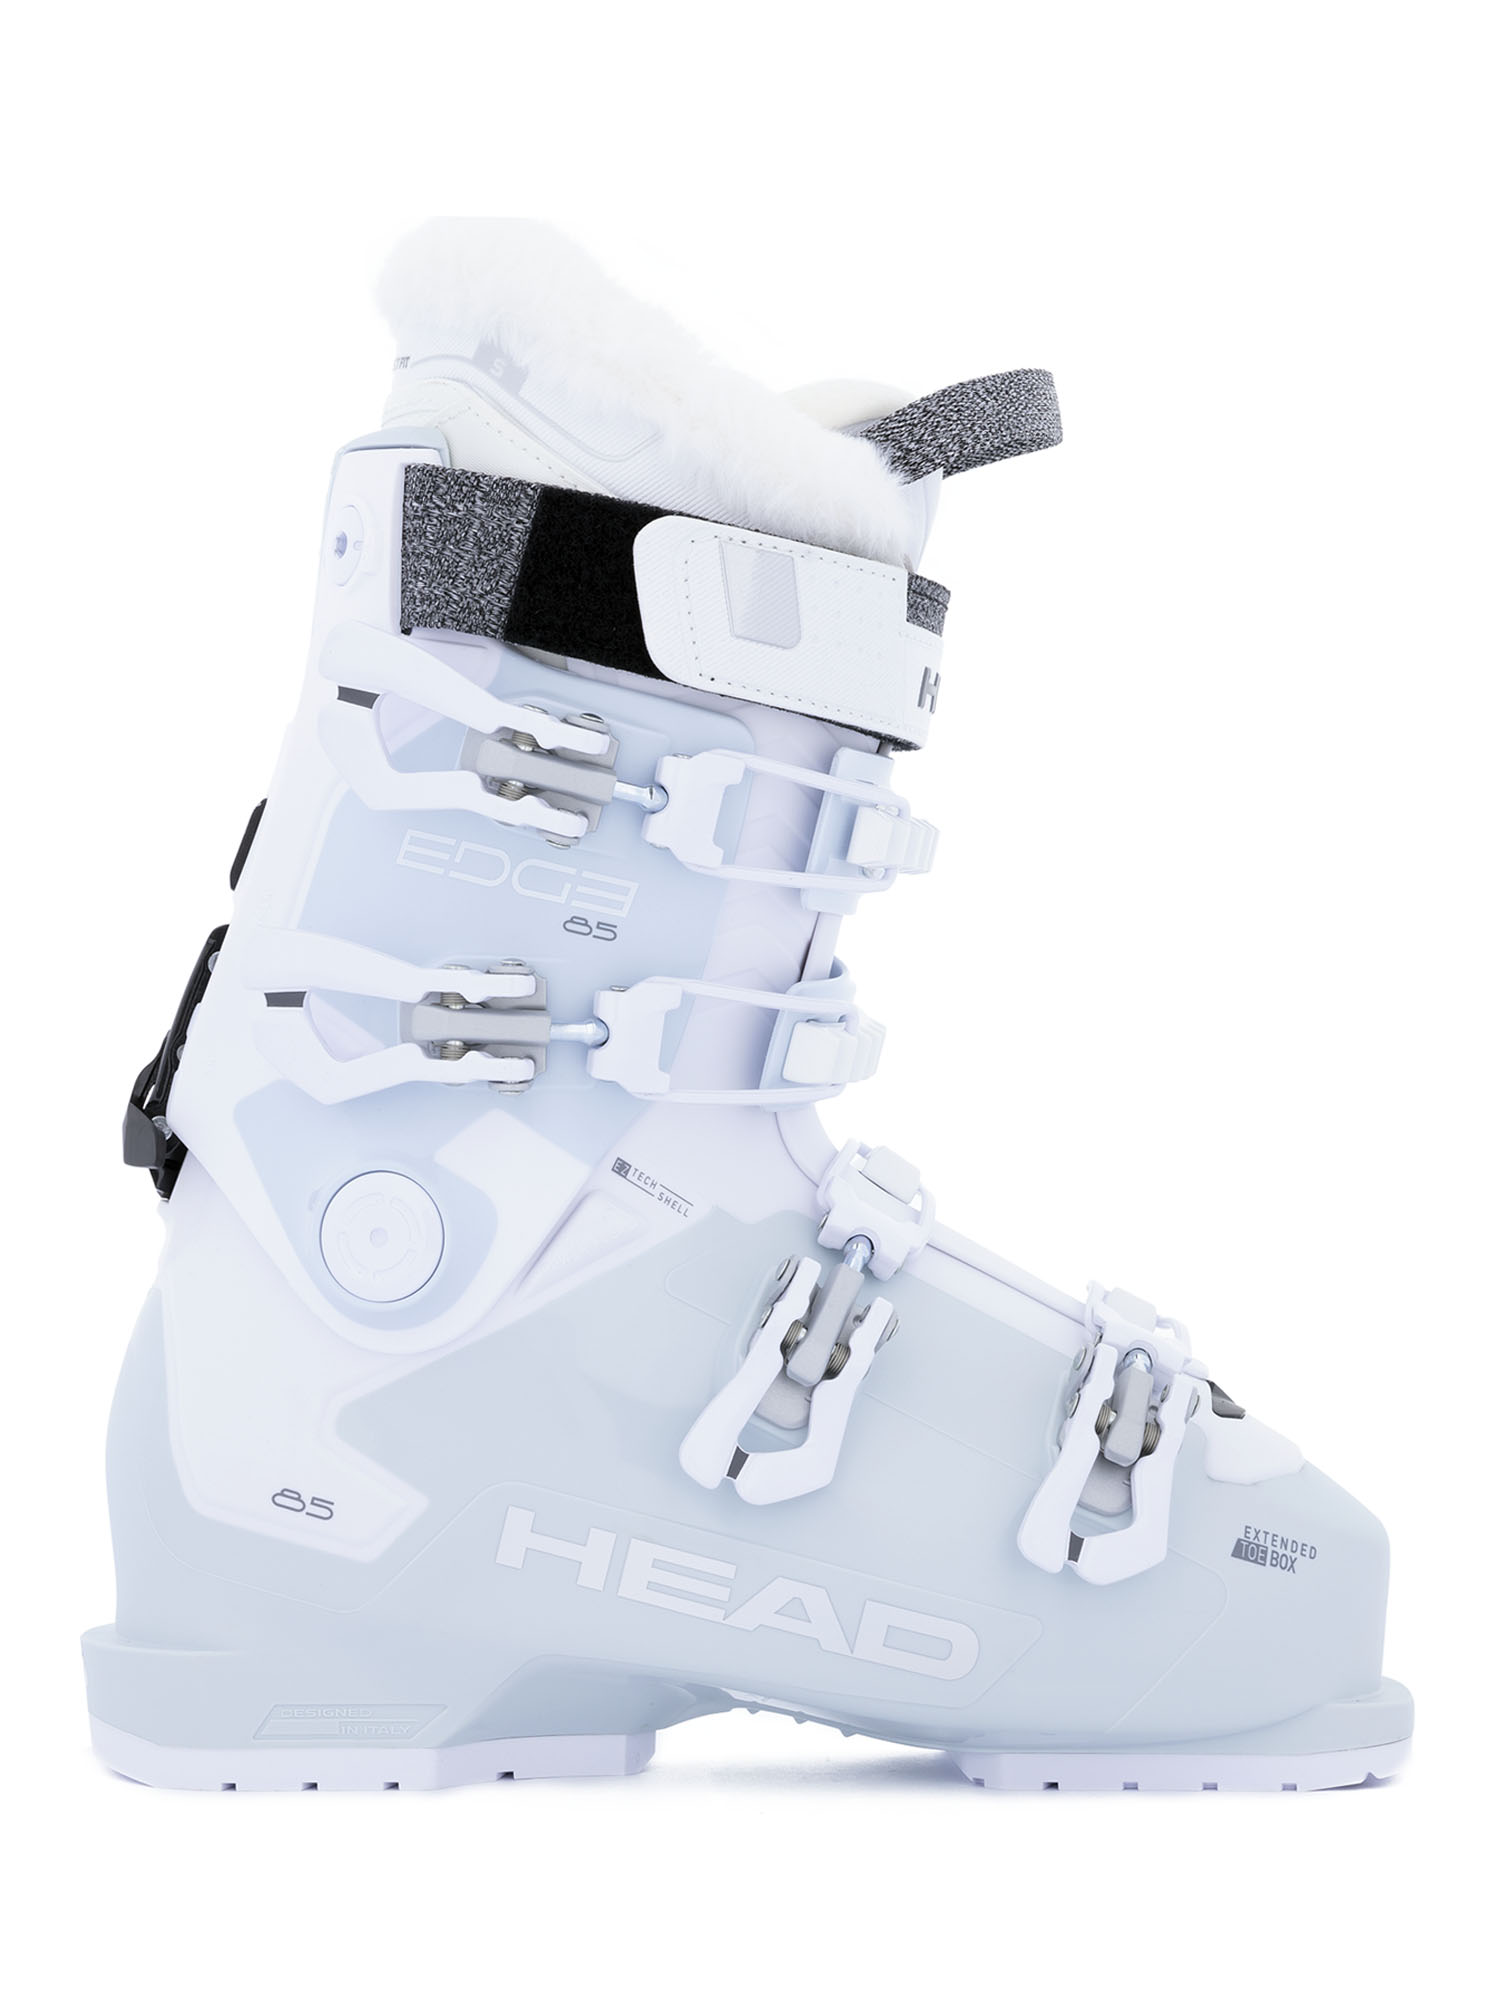 Горнолыжные ботинки HEAD Edge 85 W Ice Gray